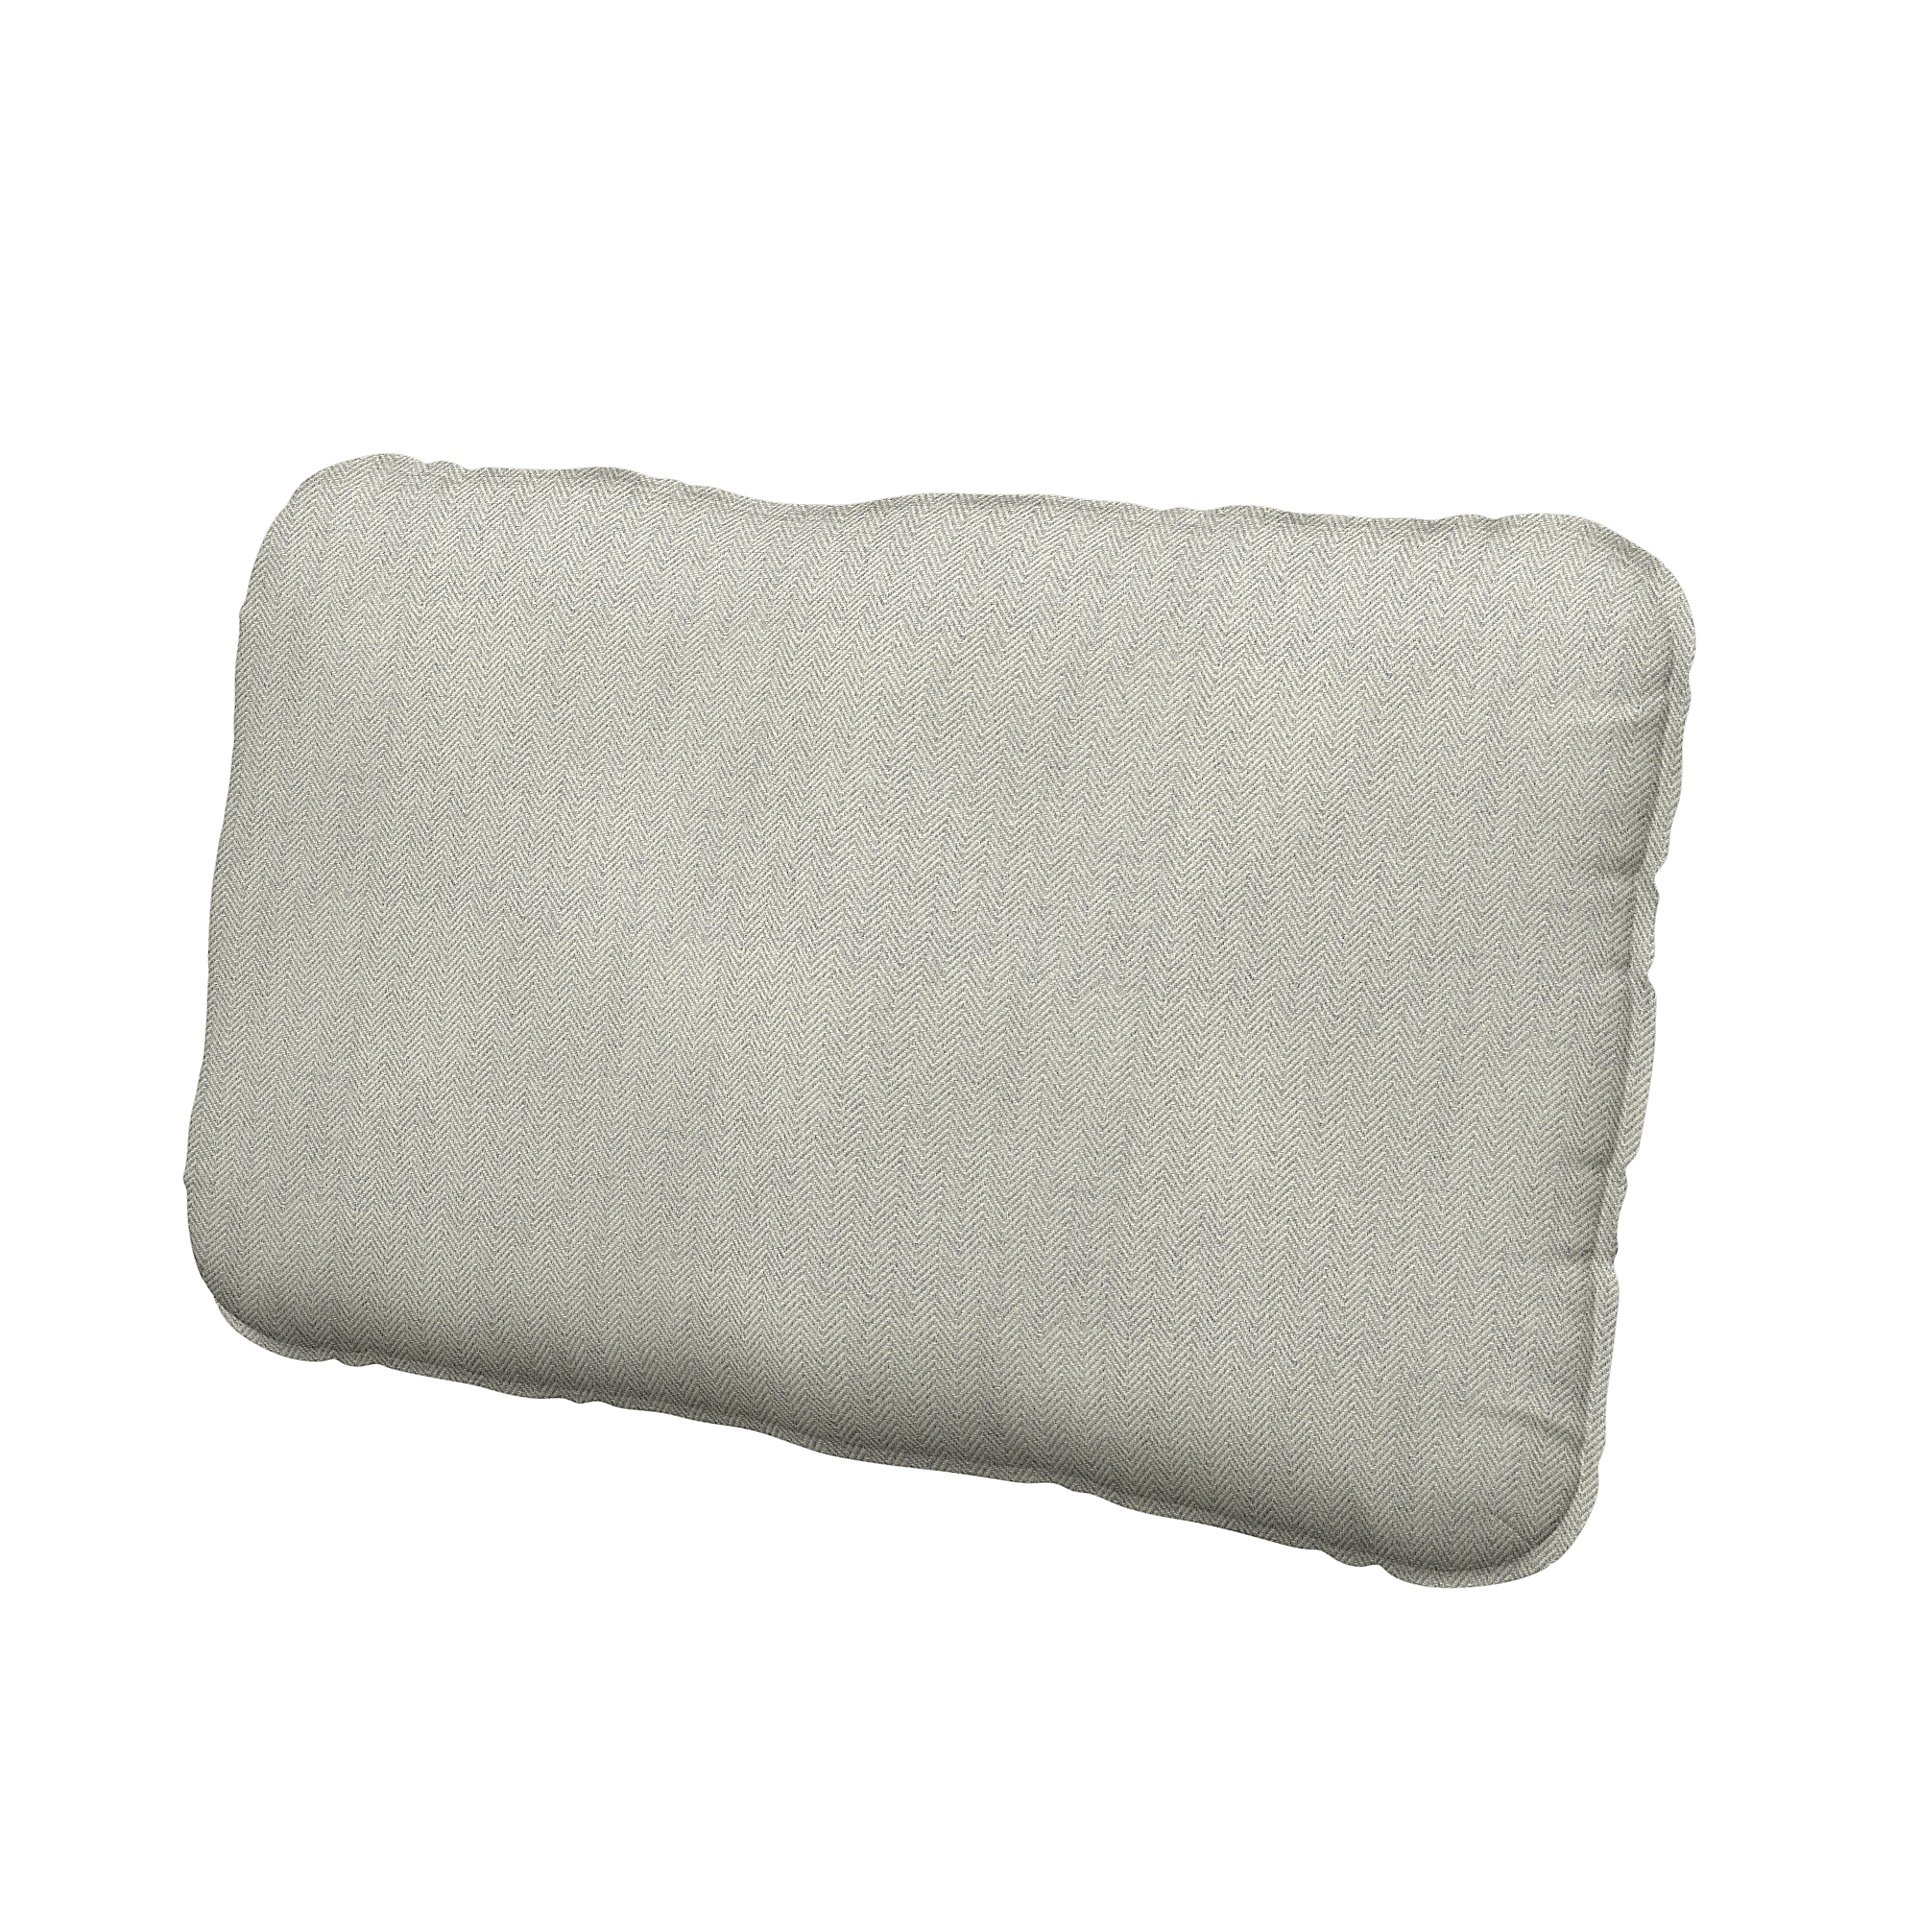 IKEA - Vallentuna back cushion cover 40x75cm, Silver Grey, Cotton - Bemz